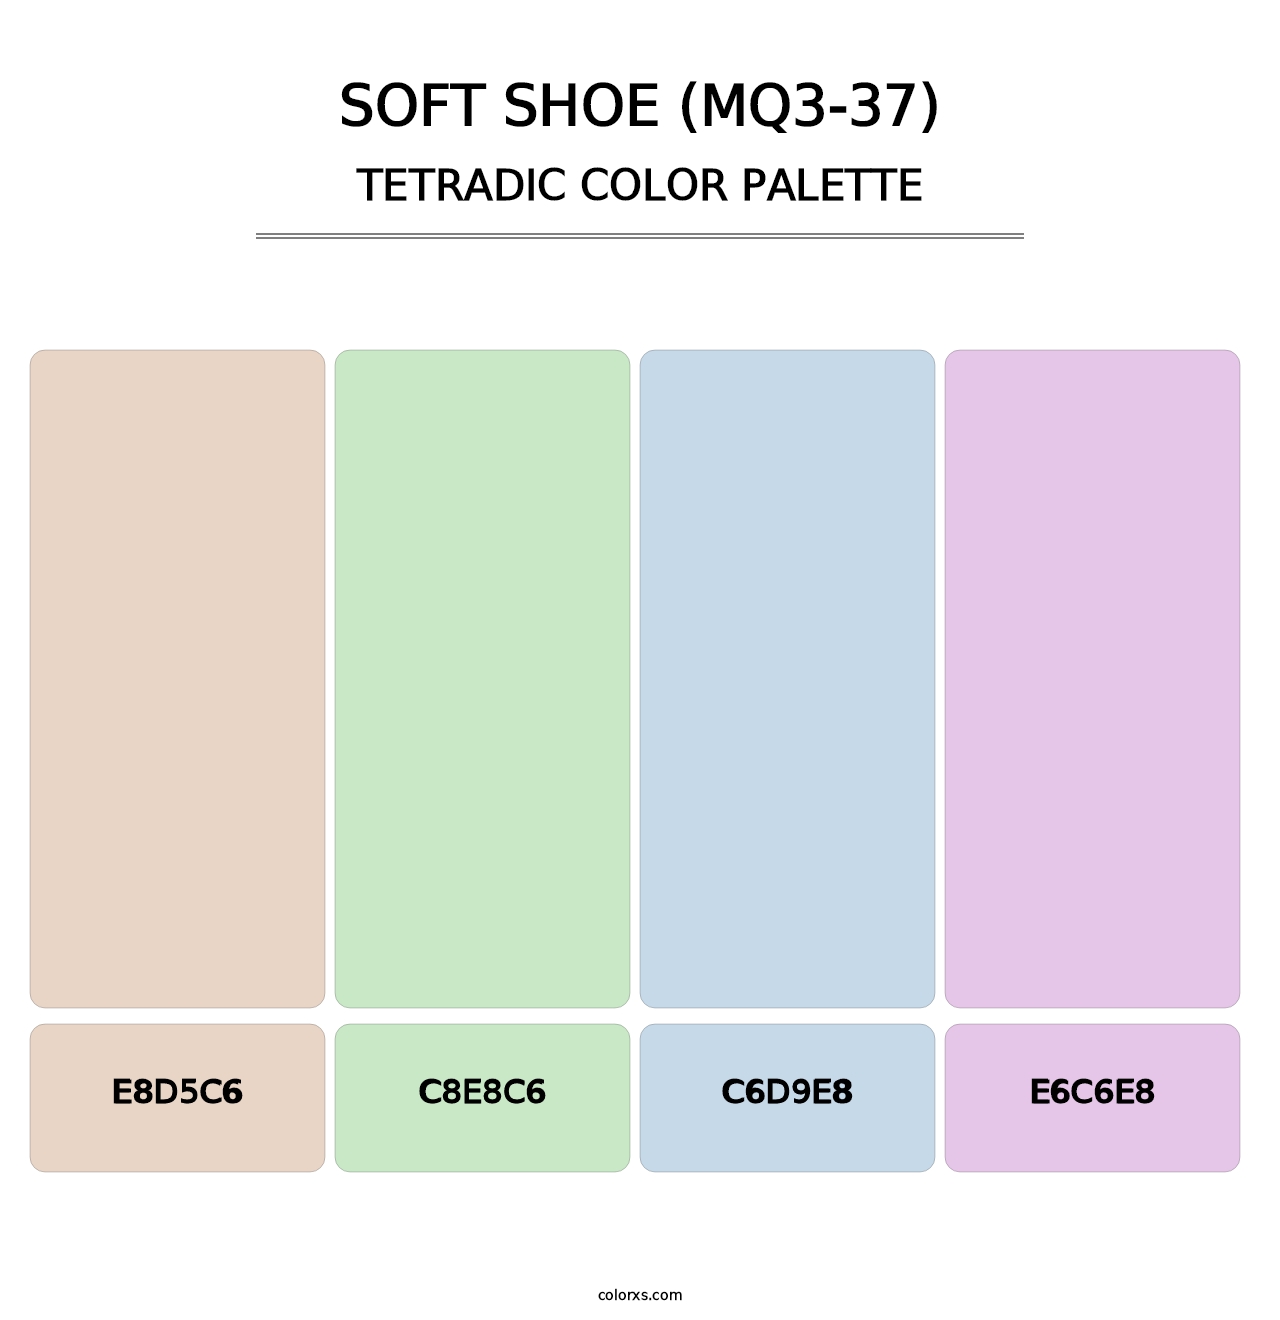 Soft Shoe (MQ3-37) - Tetradic Color Palette